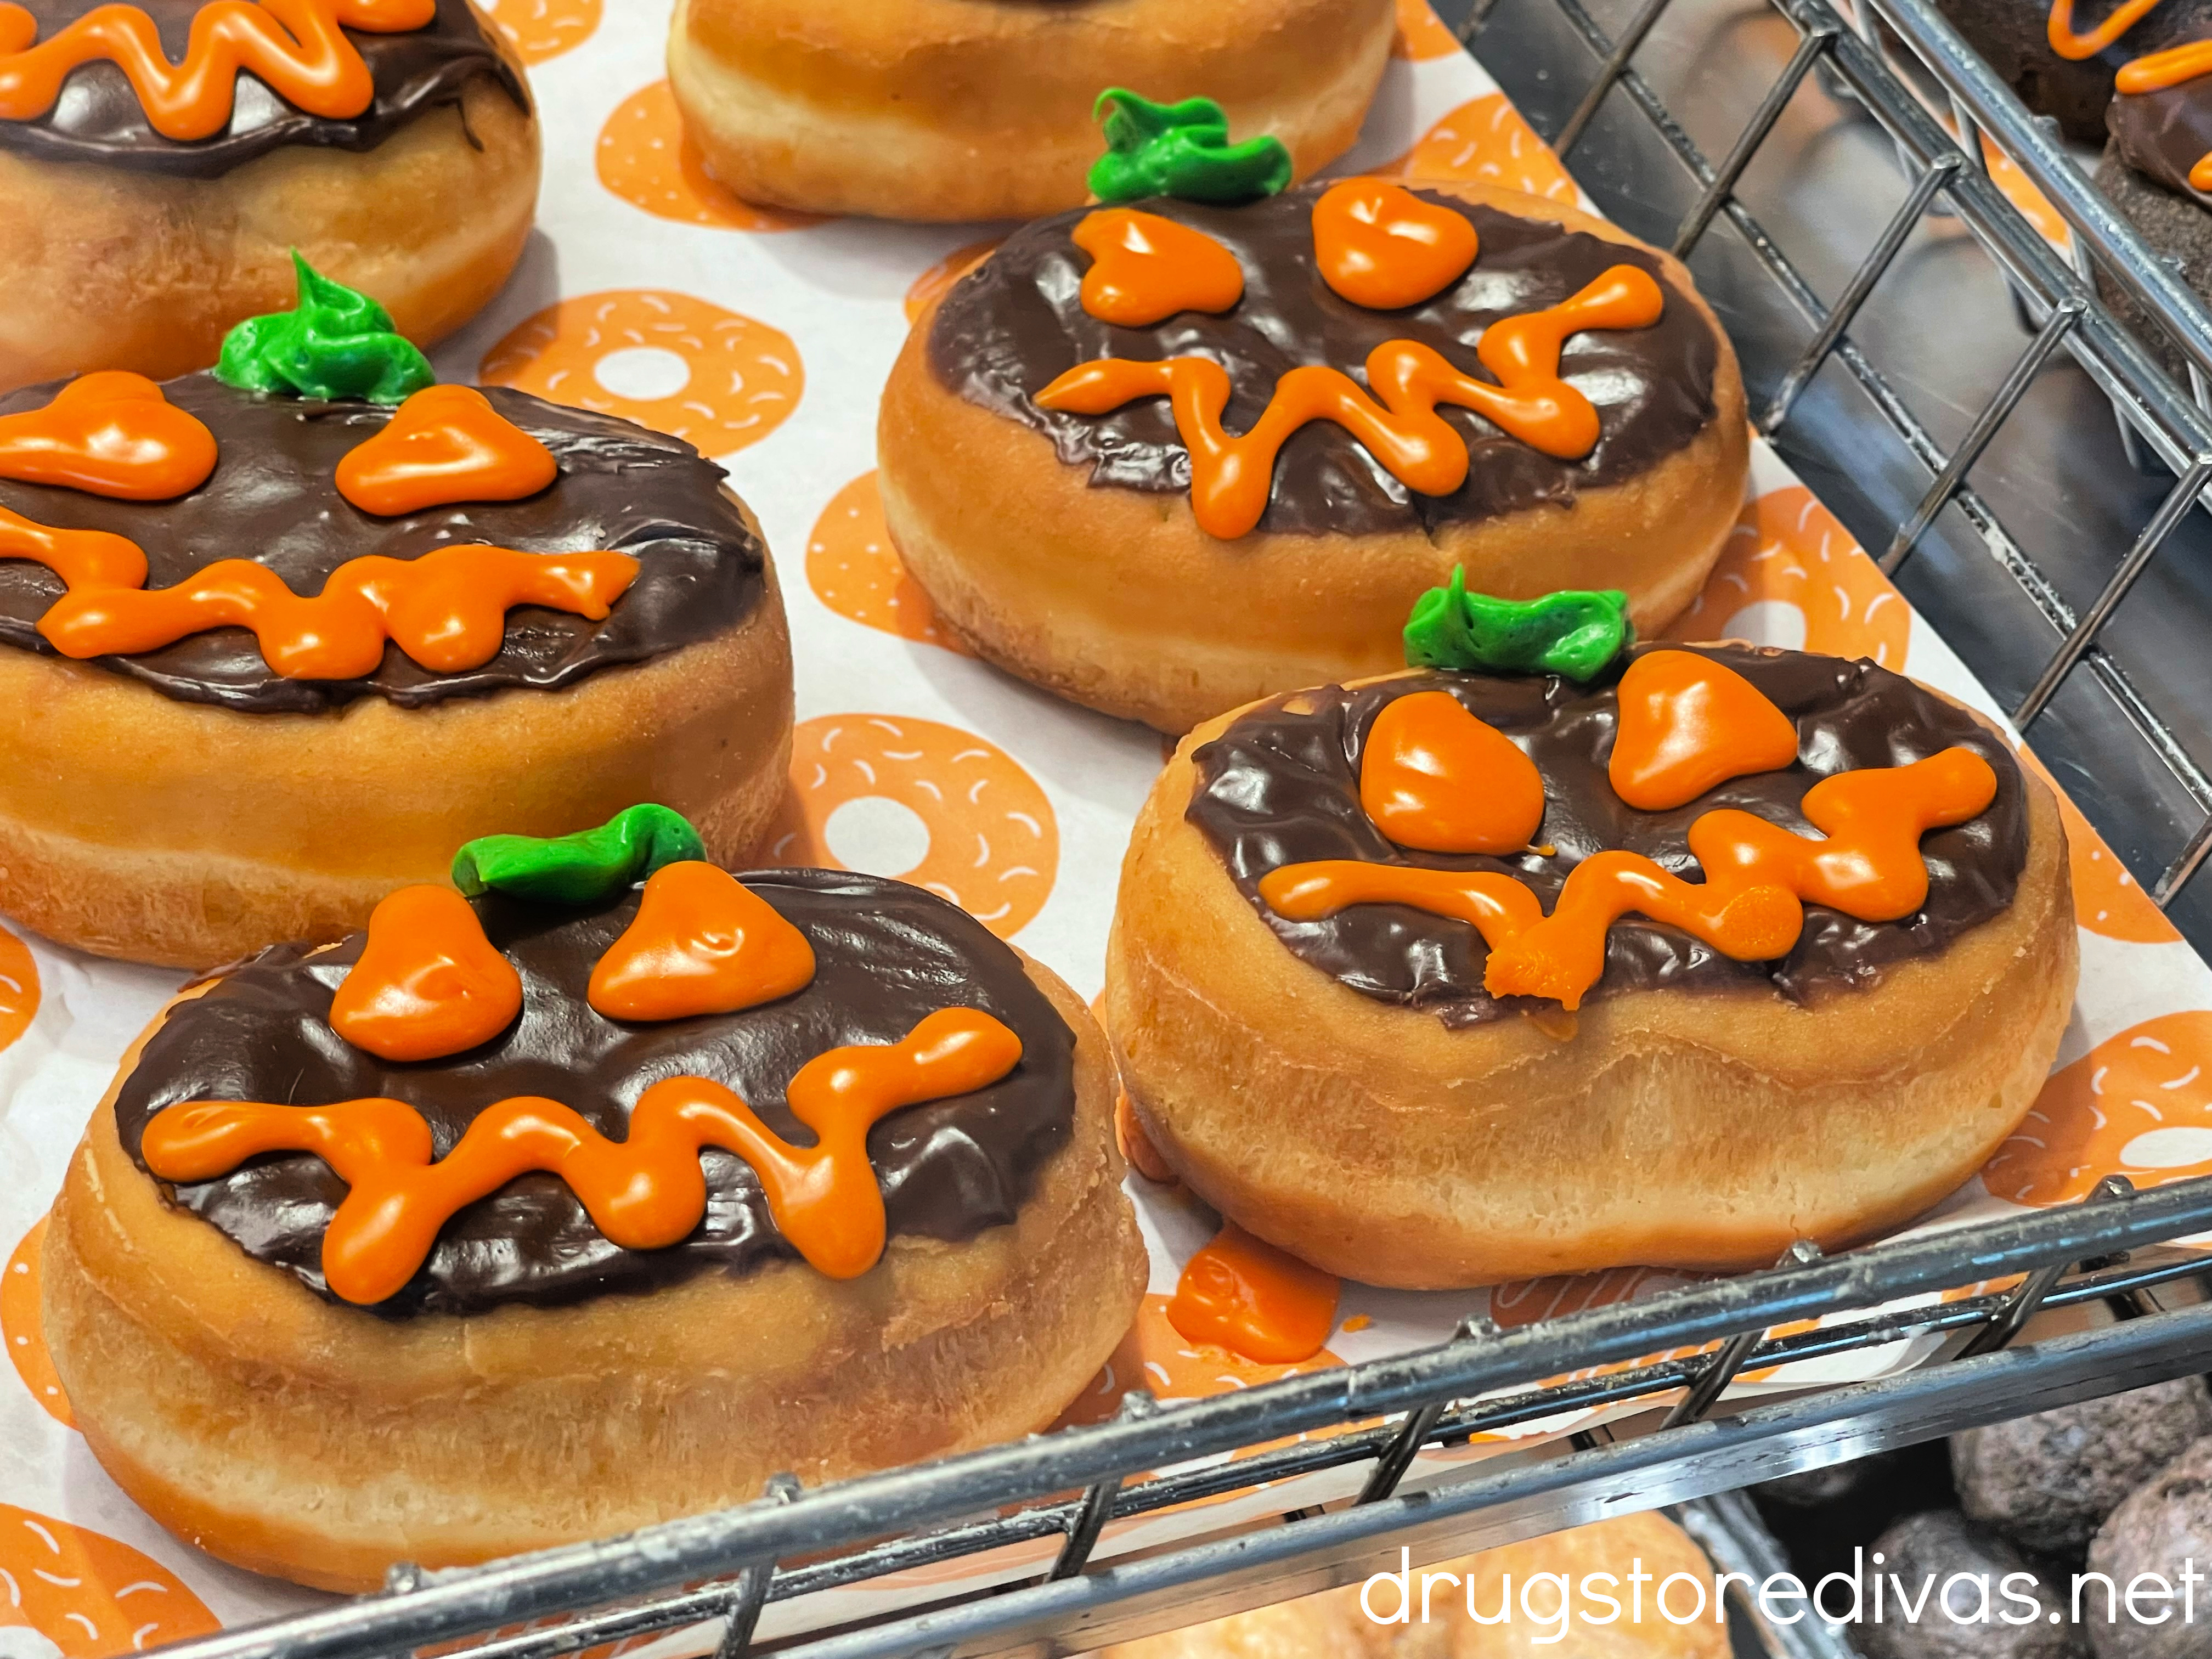 Halloween doughnuts at Dunkin'.